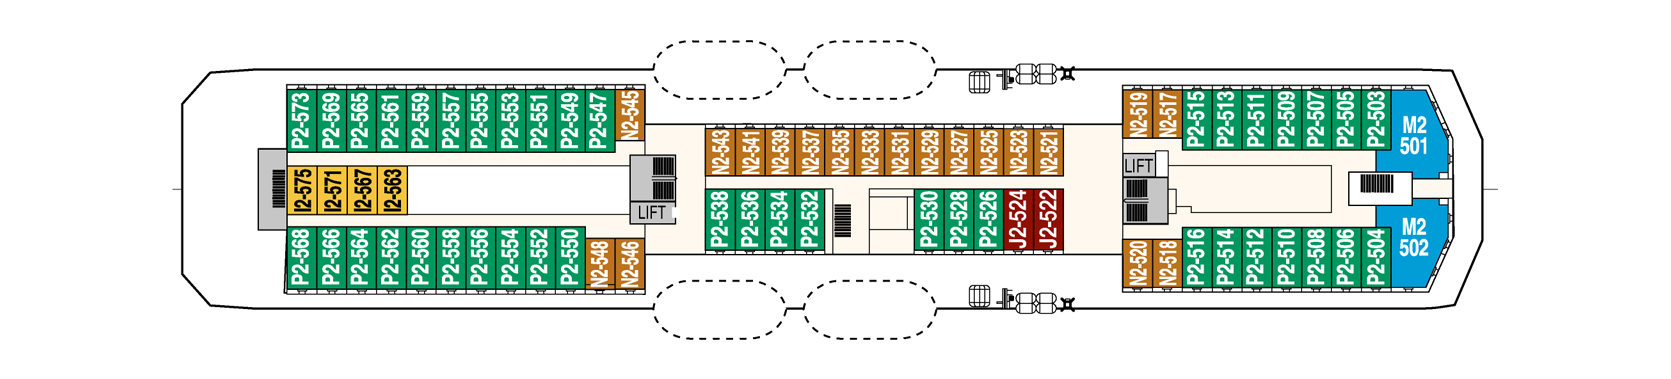 1548636383.8134_d272_Hurtigruten MS Nordkapp Deck Plans Deck 5.png